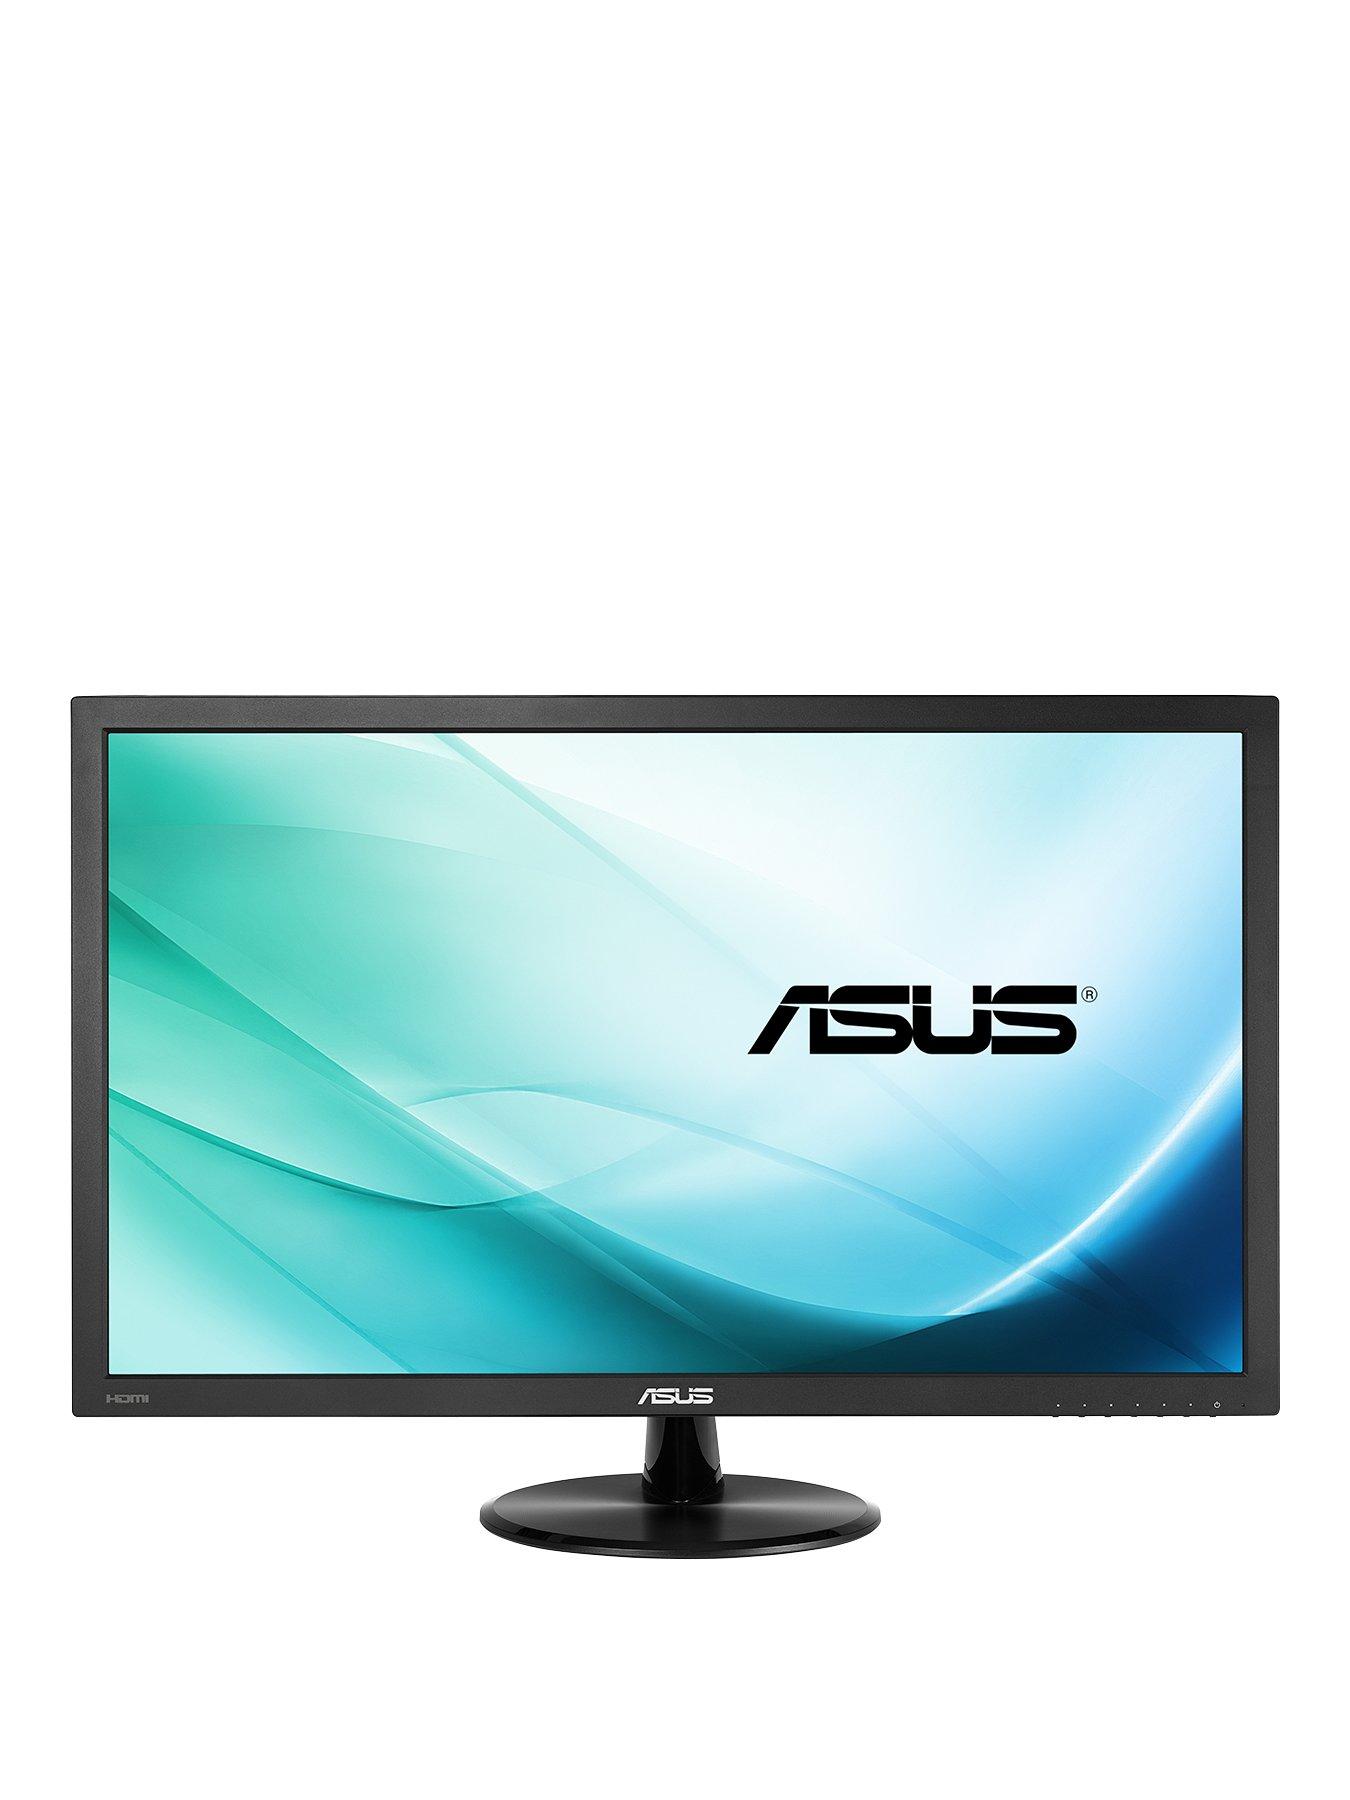 Asus Vp278H-P 27 Inch Led-Backlit Lcd Full Hd Monitor